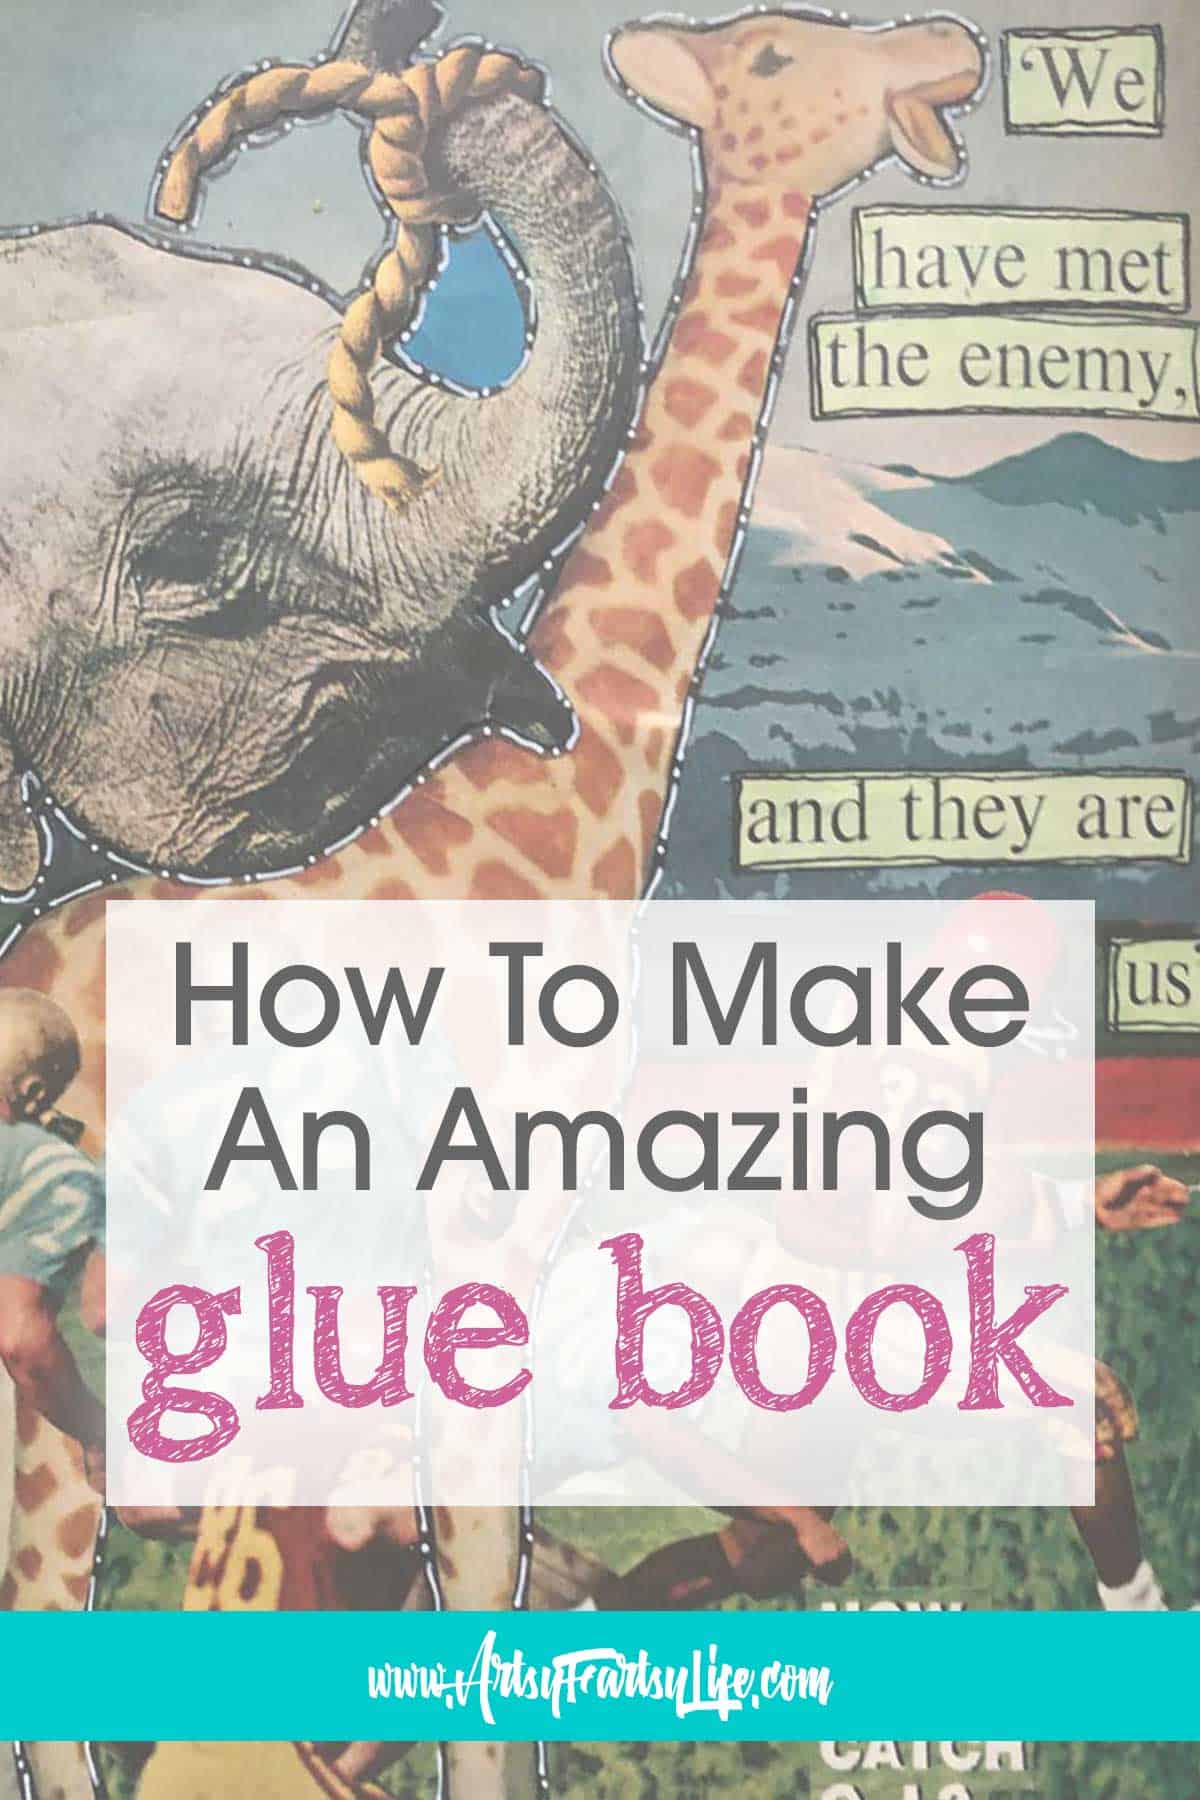 Book Glue - The Book Cover Co